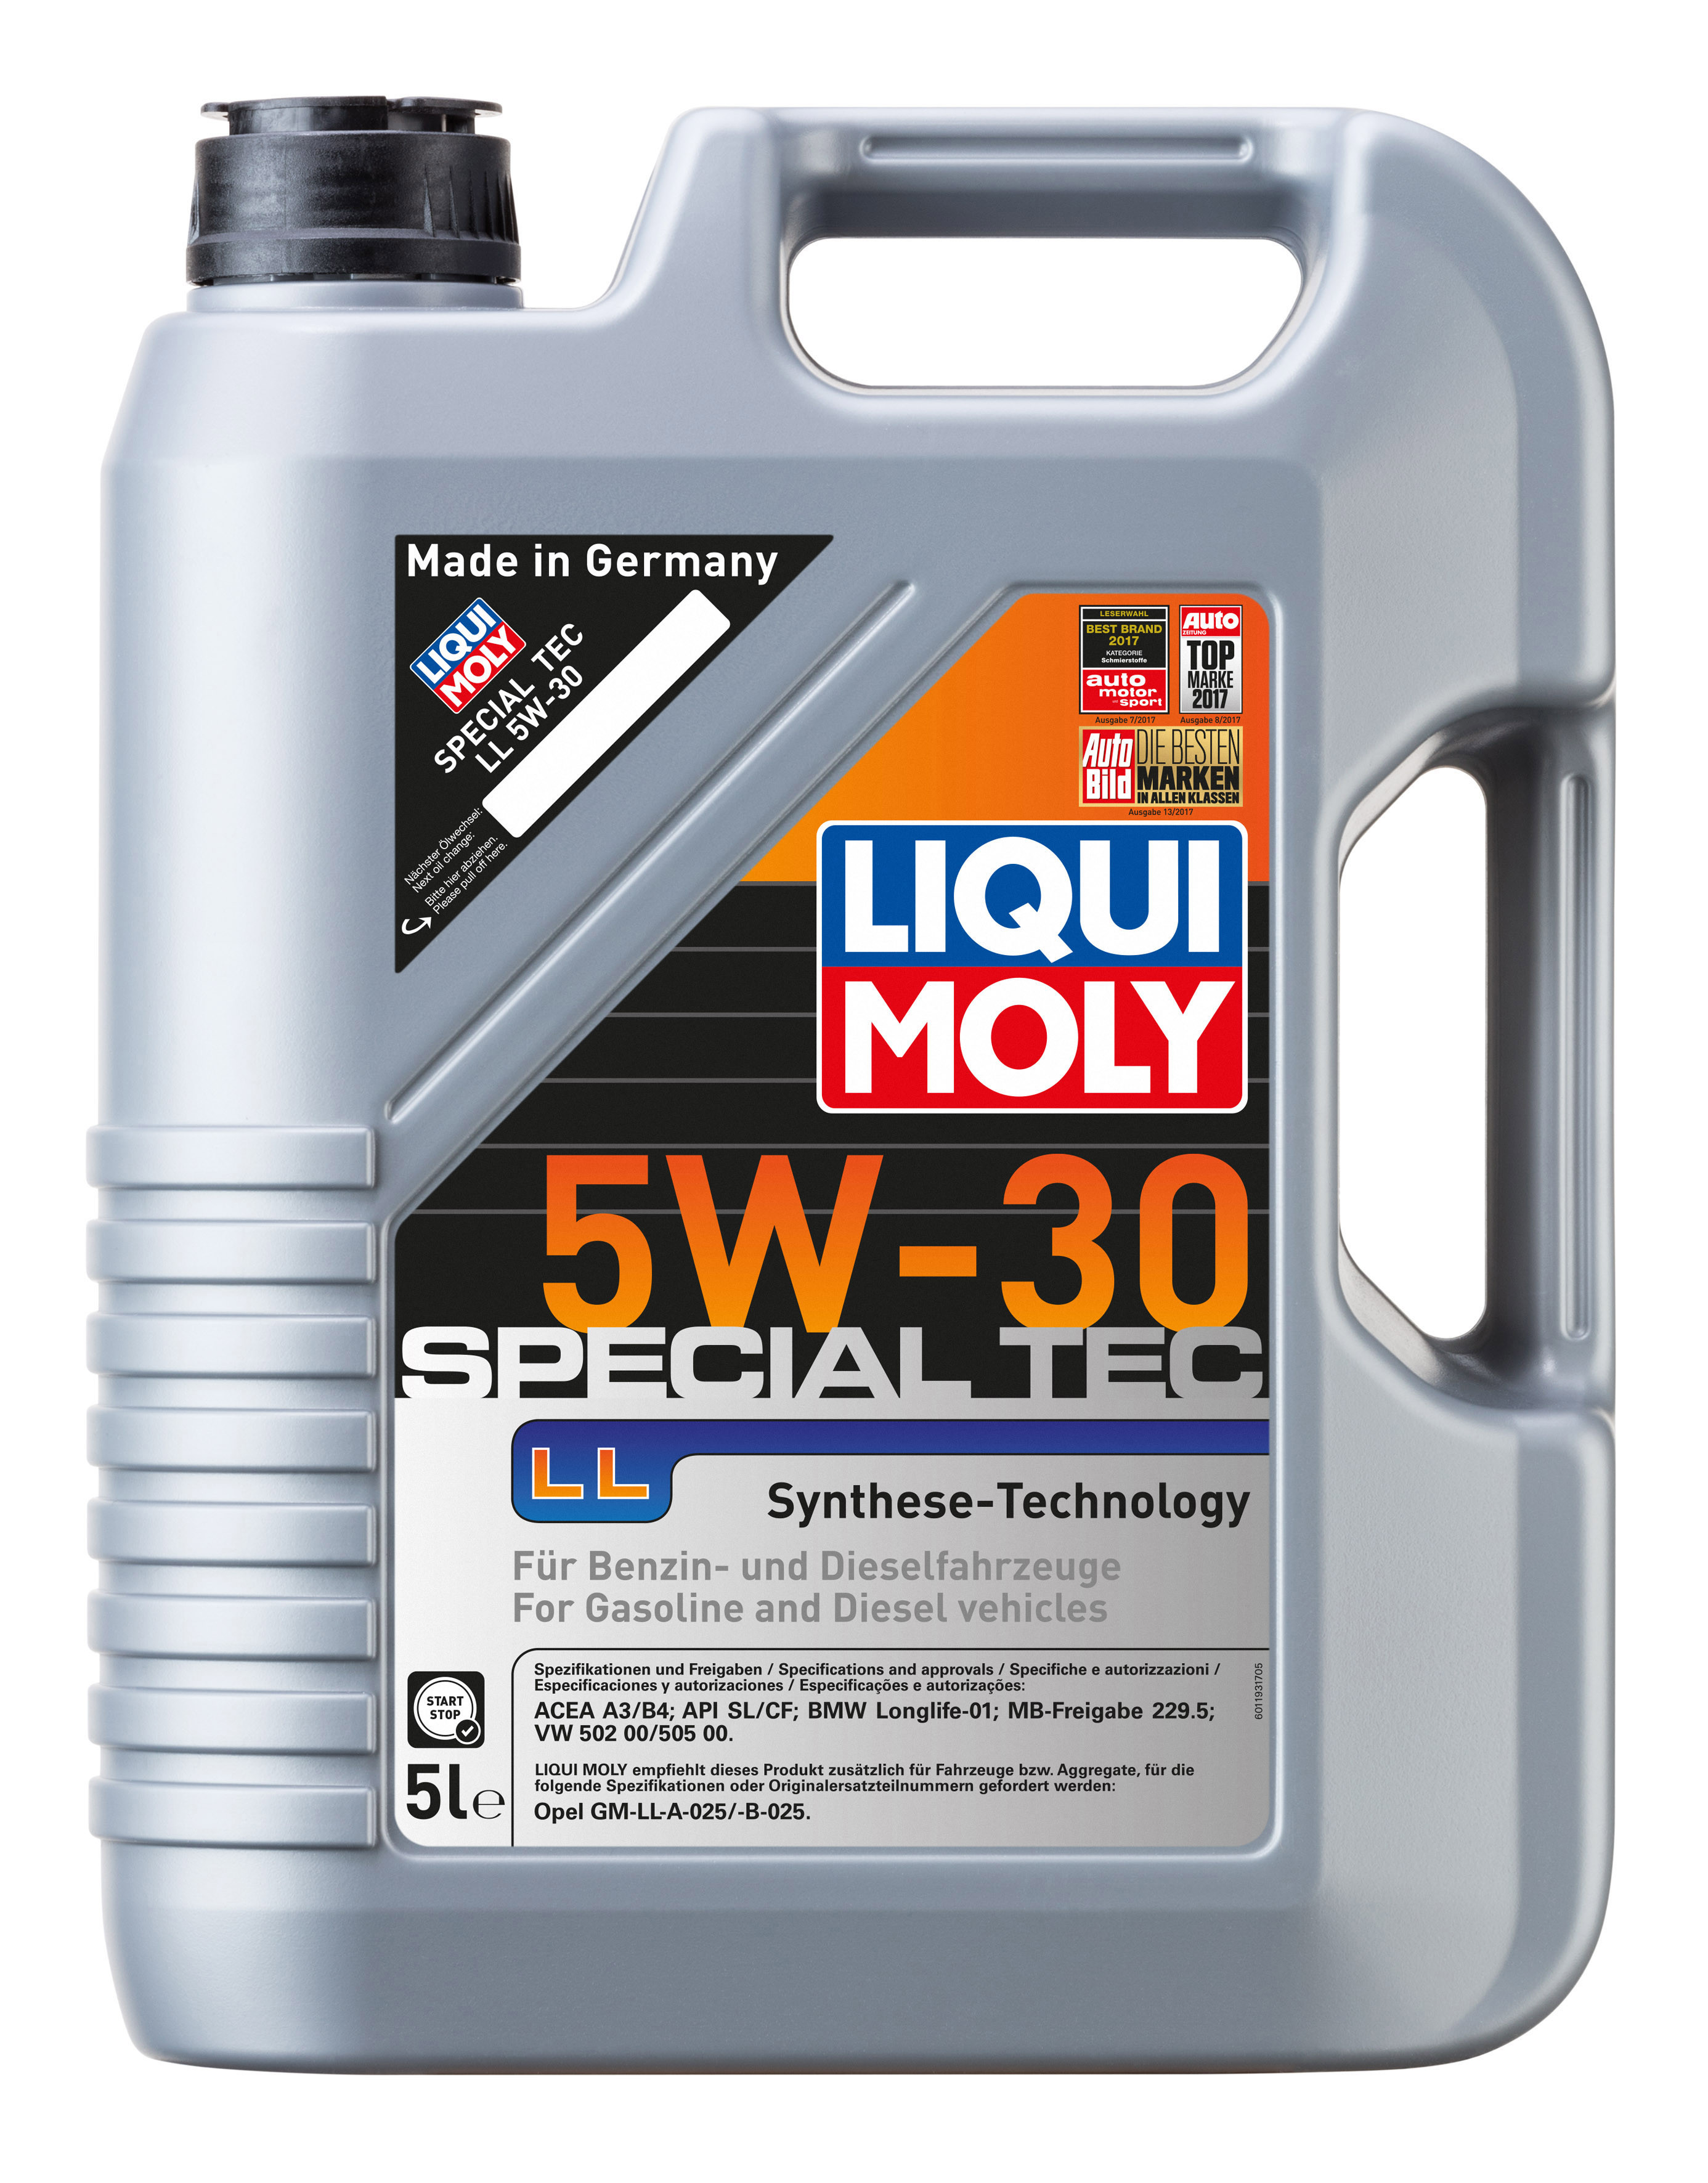 НС-синтетическое моторное масло Liqui Moly Special Tec LL 5W-30 5л